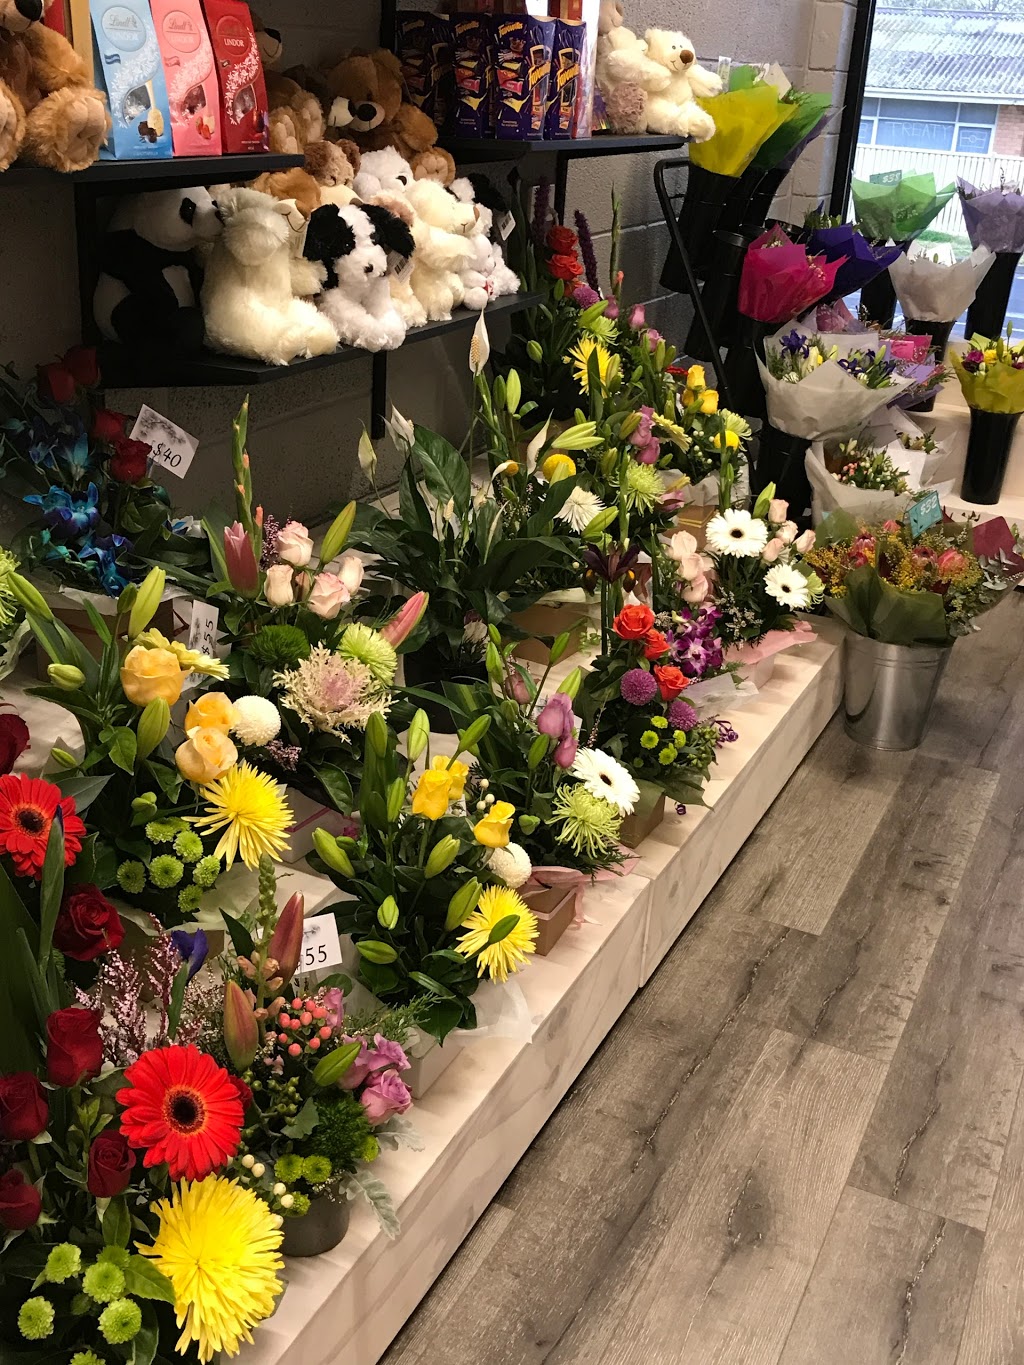 Grovedale Florist & Gift Shop | florist | 13A Peter St, Geelong VIC 3216, Australia | 0352441771 OR +61 3 5244 1771